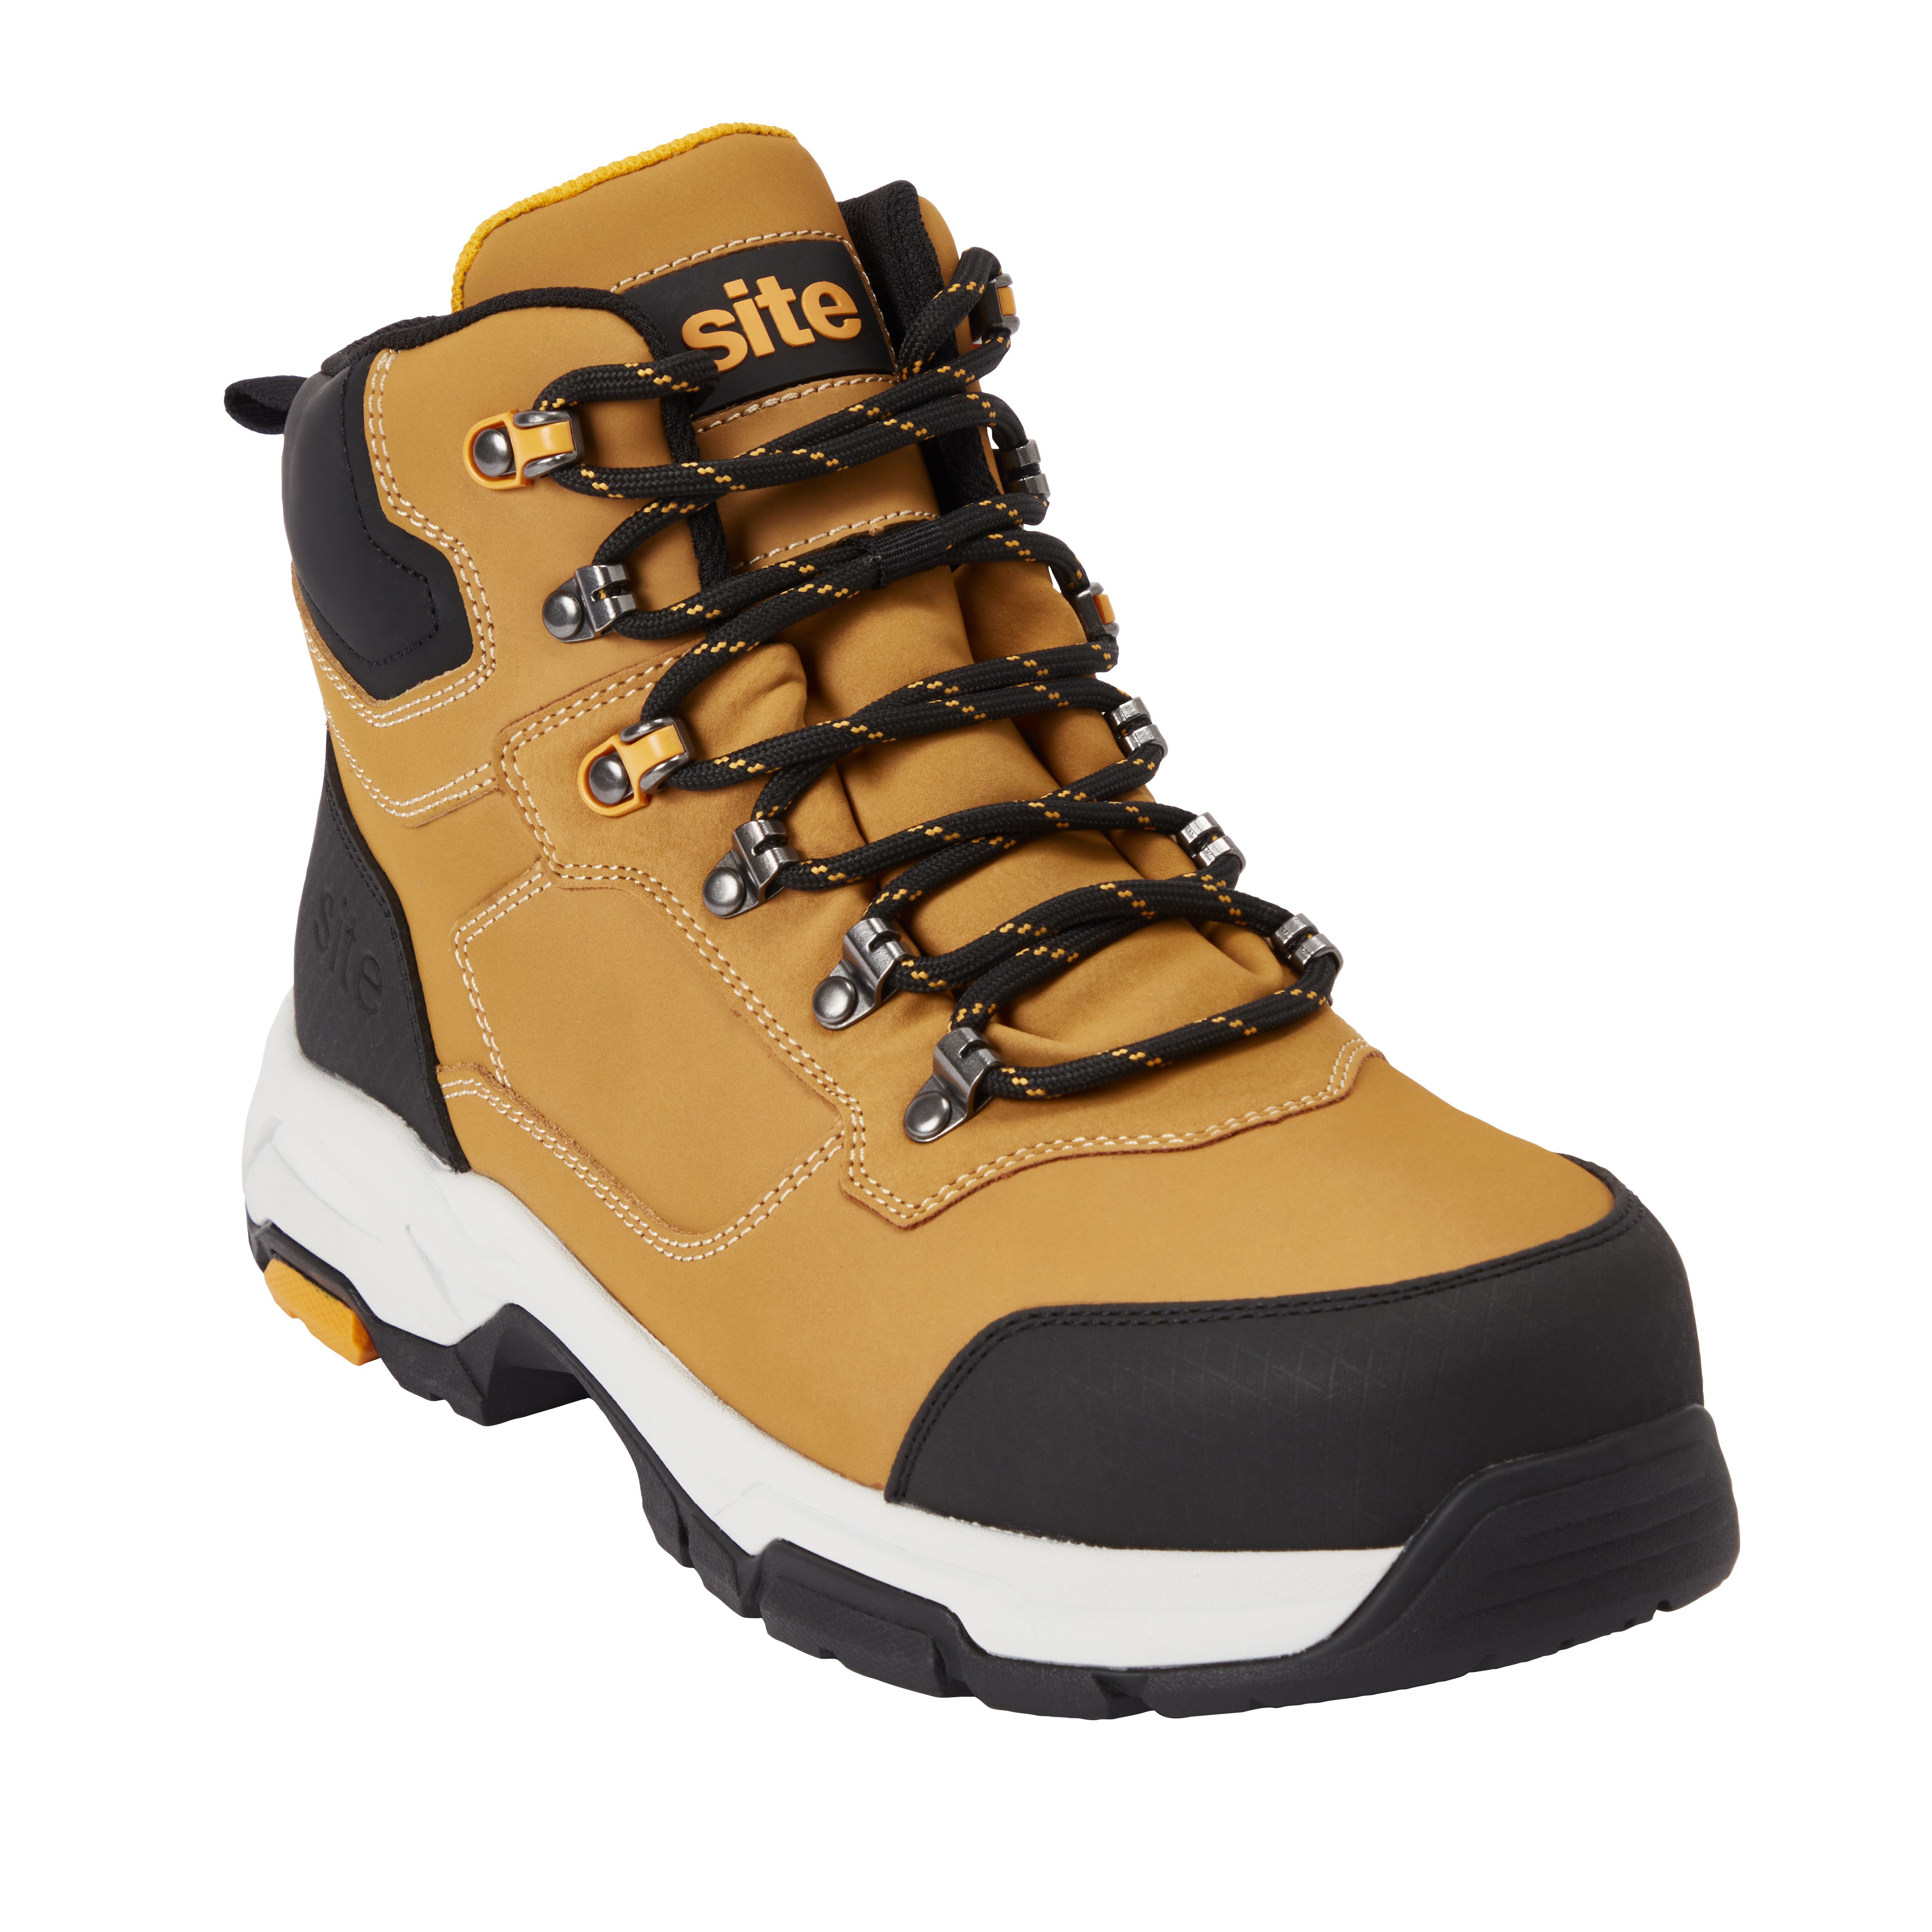 Site Stornes Men's Tan Safety boots, Size 12